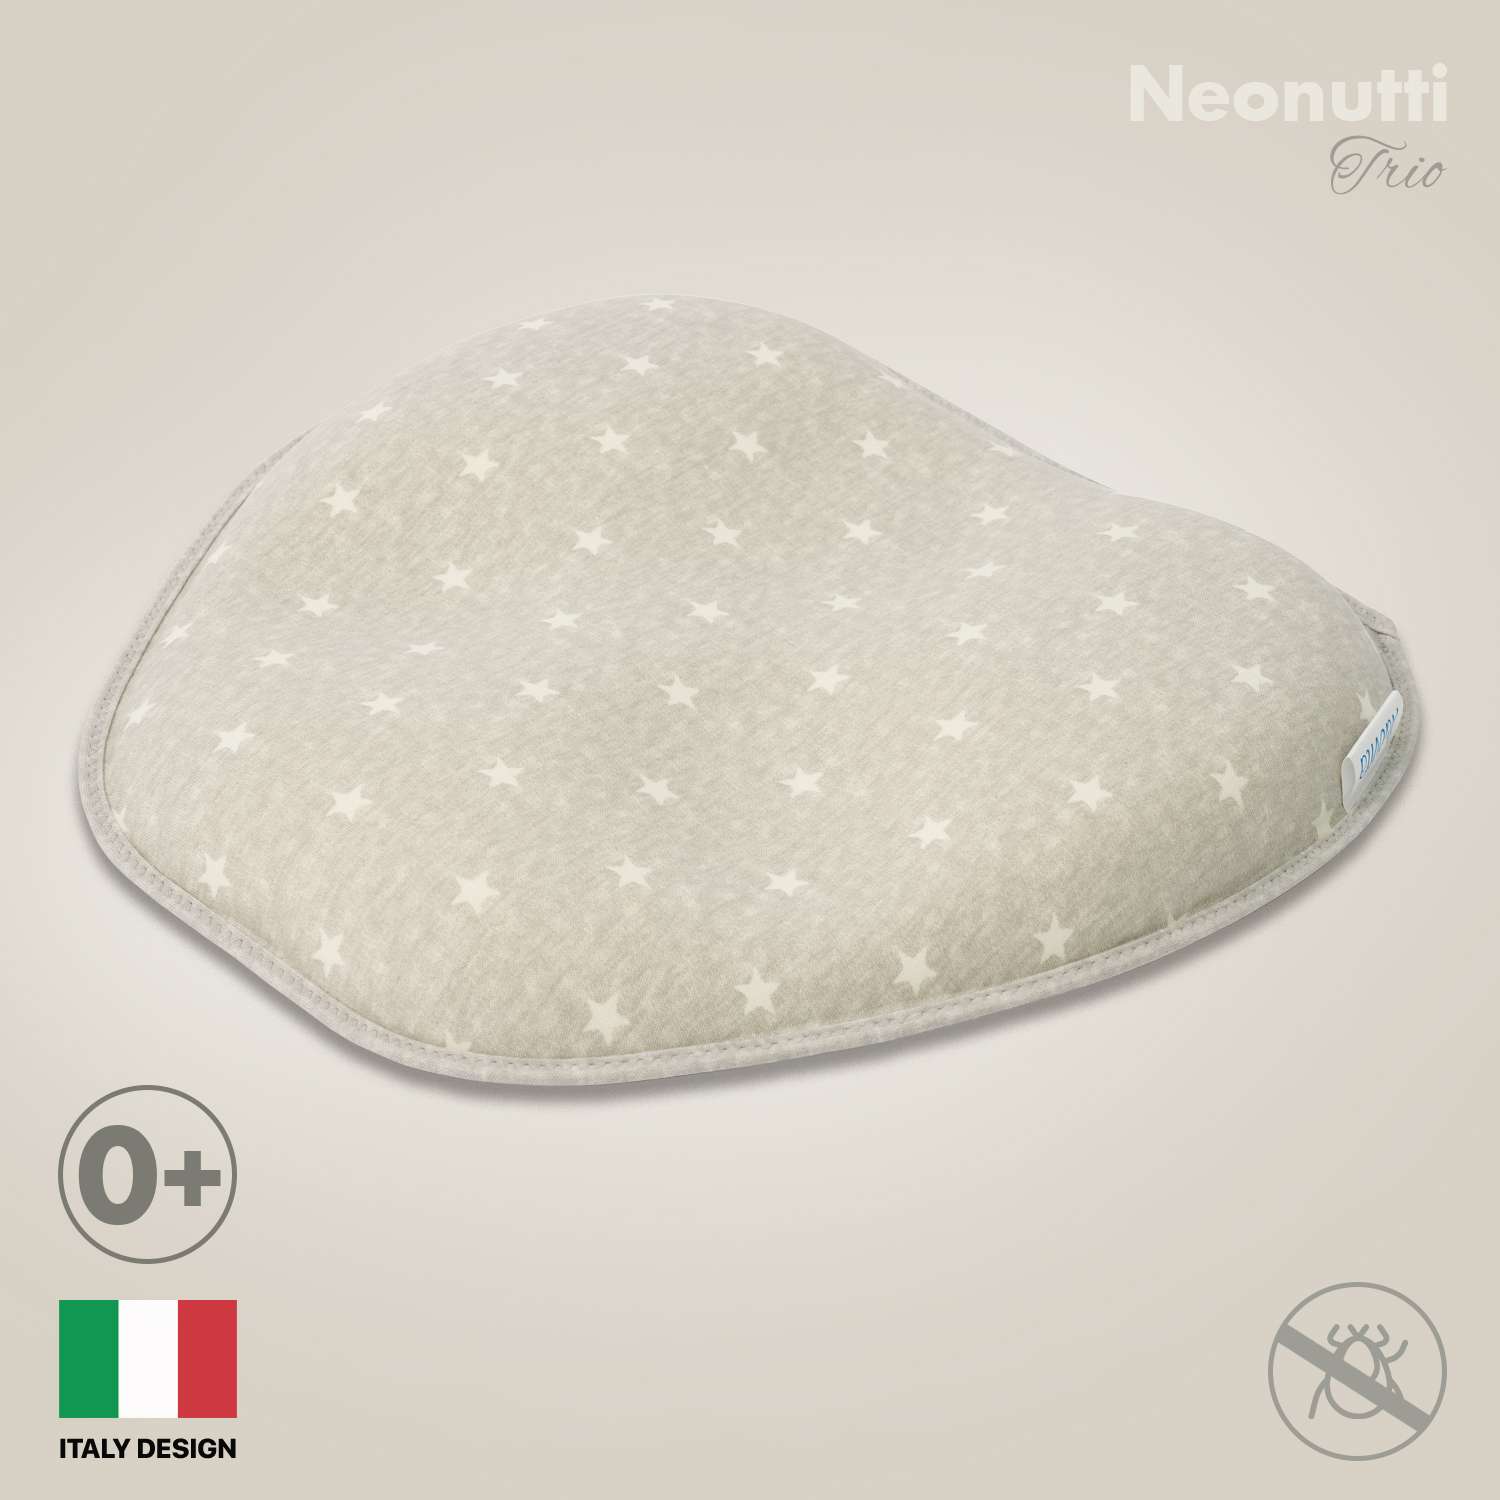 Подушка для новорожденного Nuovita Neonutti Trio Dipinto Серая - фото 2